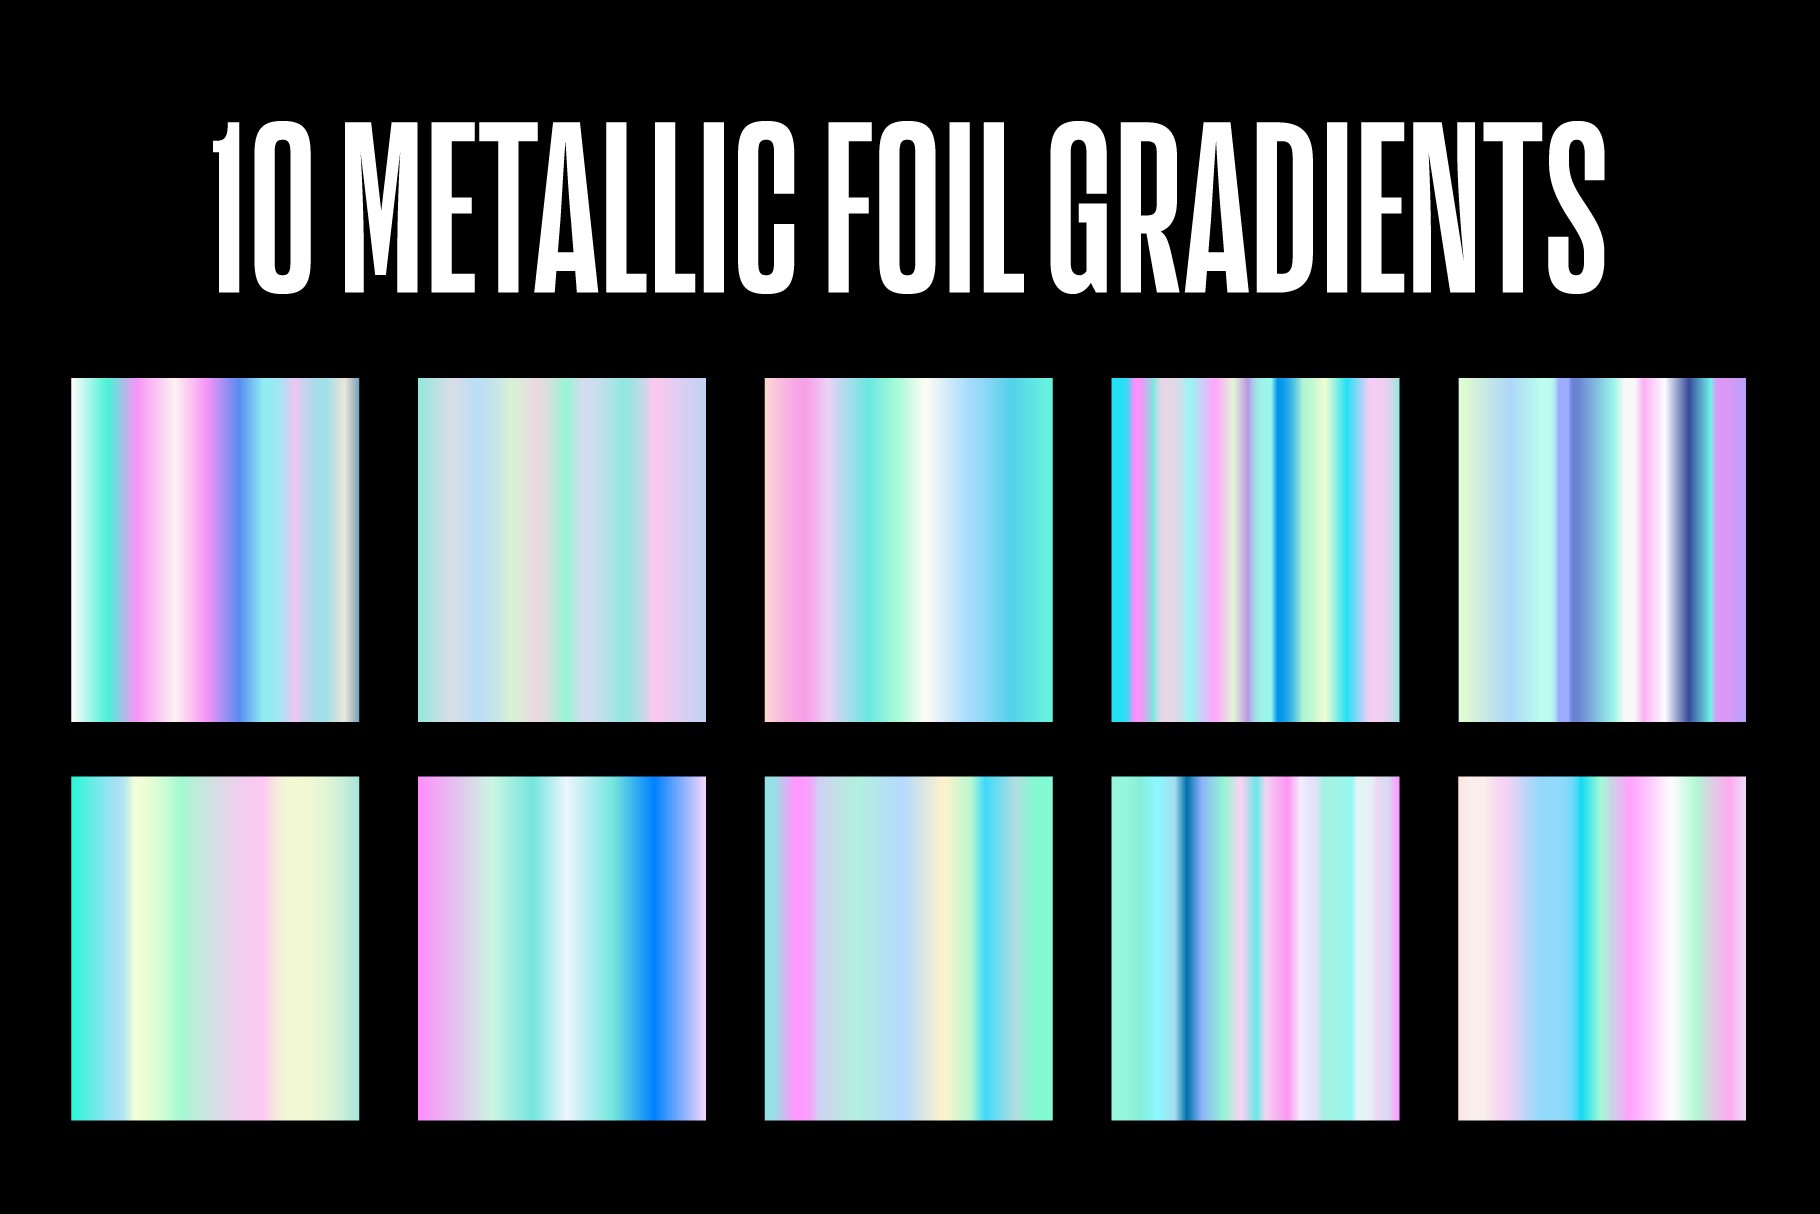 10 Metallic Foil Gradients .AIcover image.